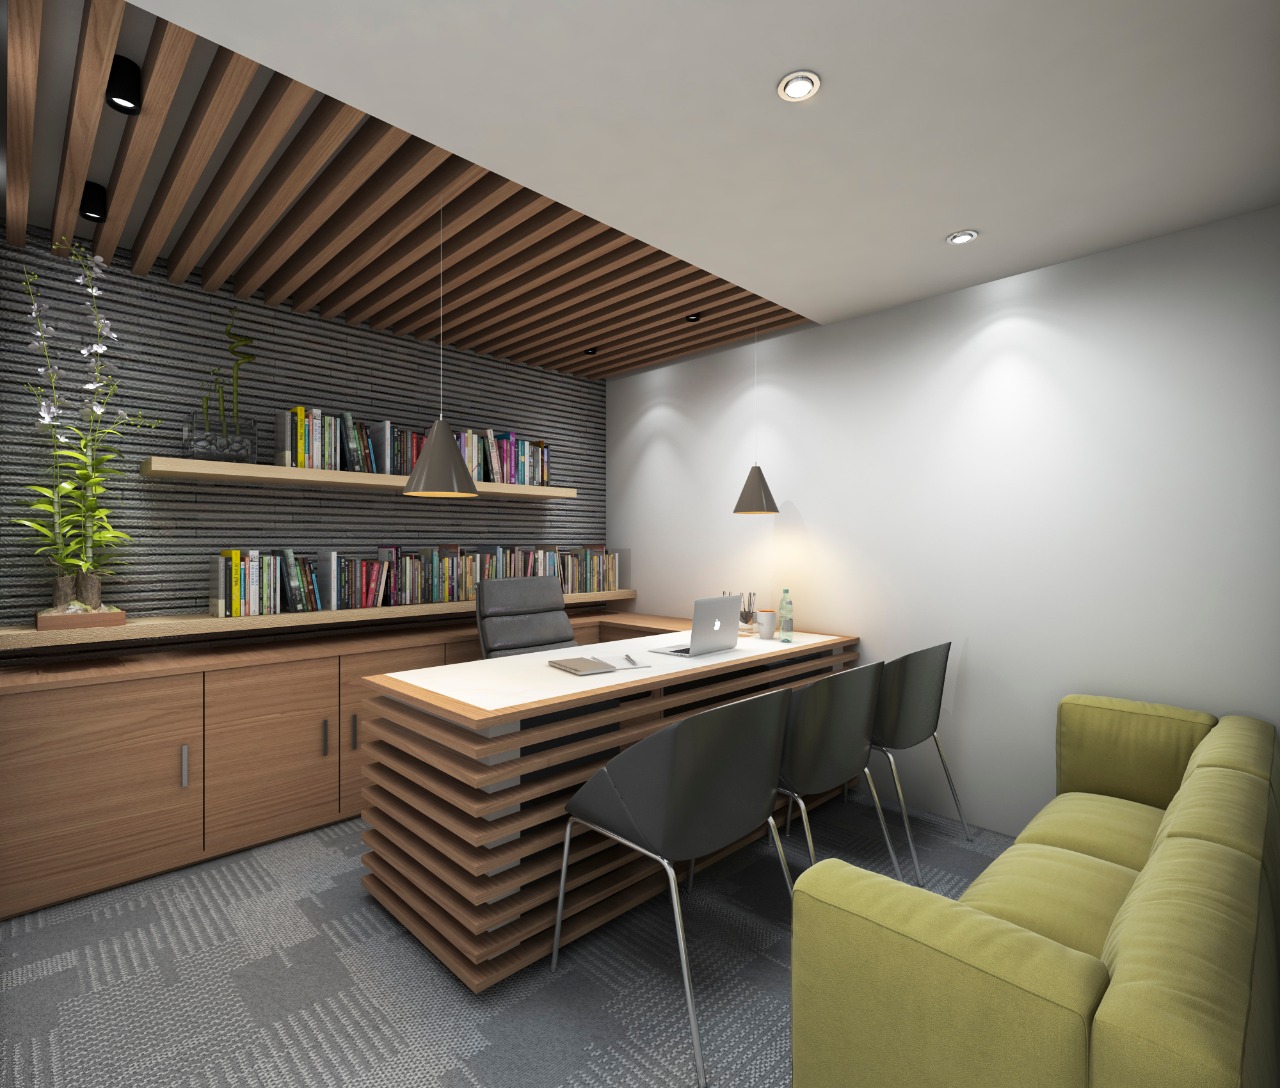 Lavish Interiors for Office Space